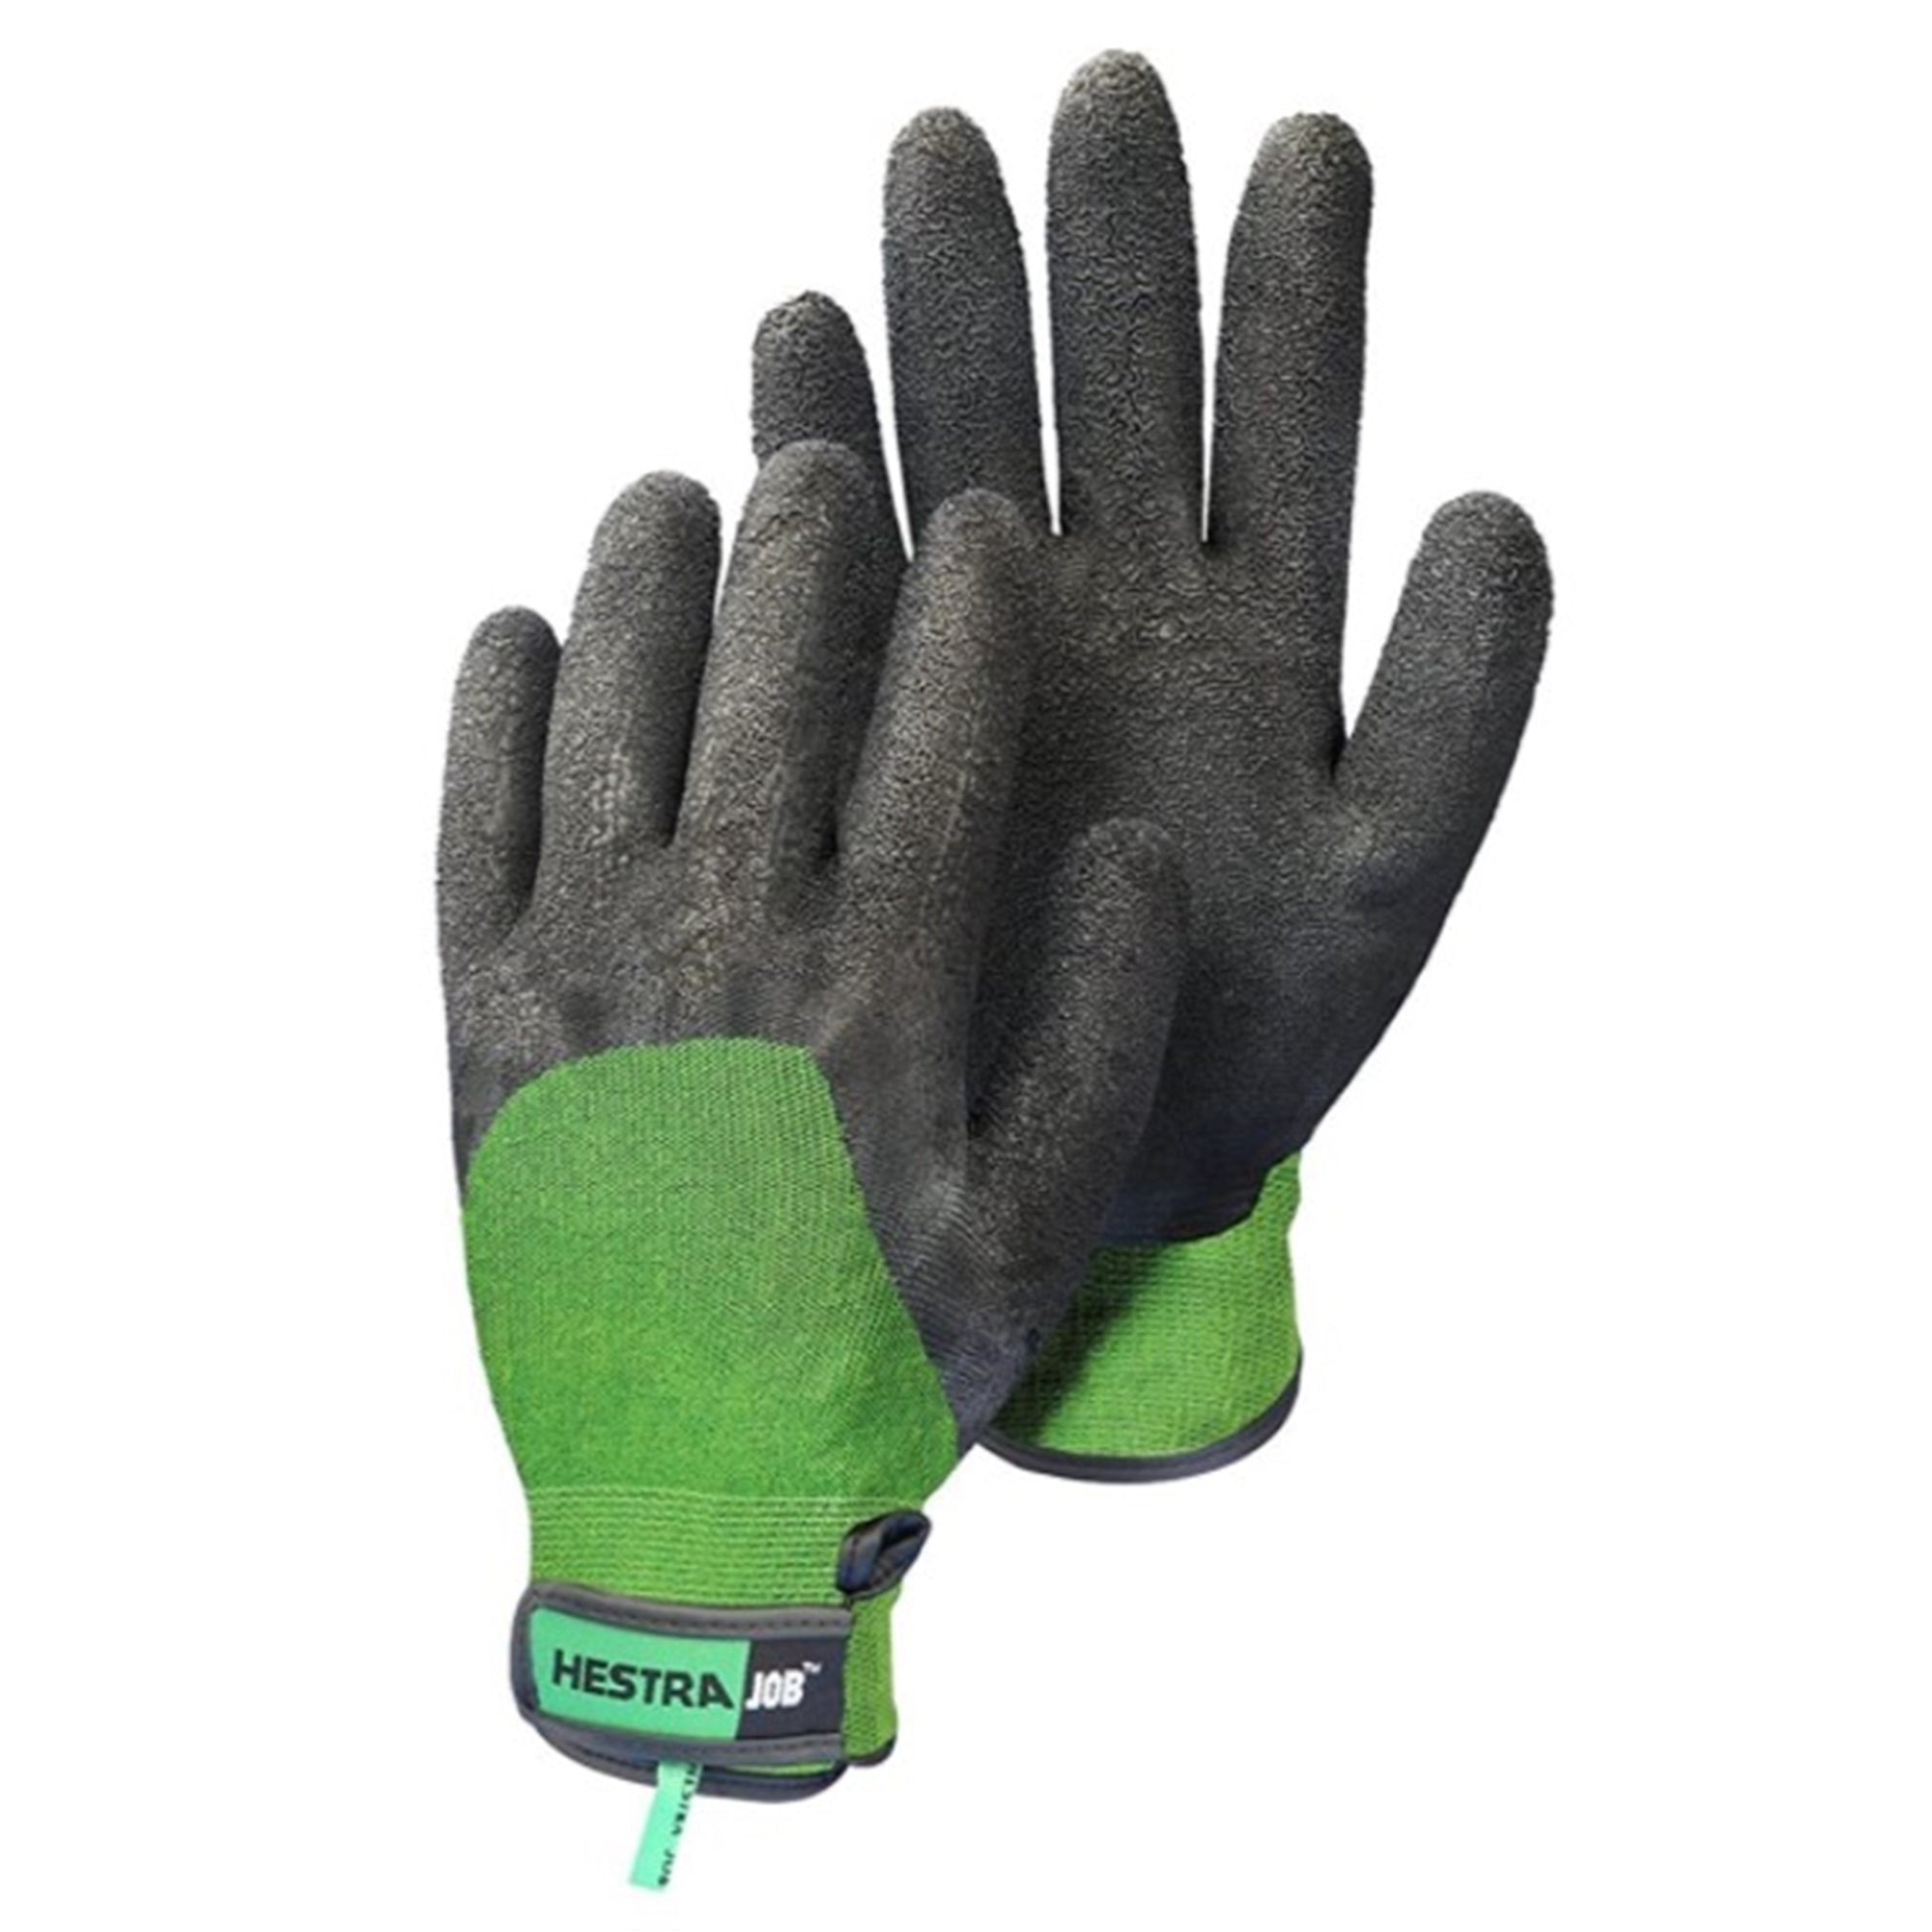 Hestra Gardening Work: Mens Bamboo Garden Gloves, Black/Green, Size 6